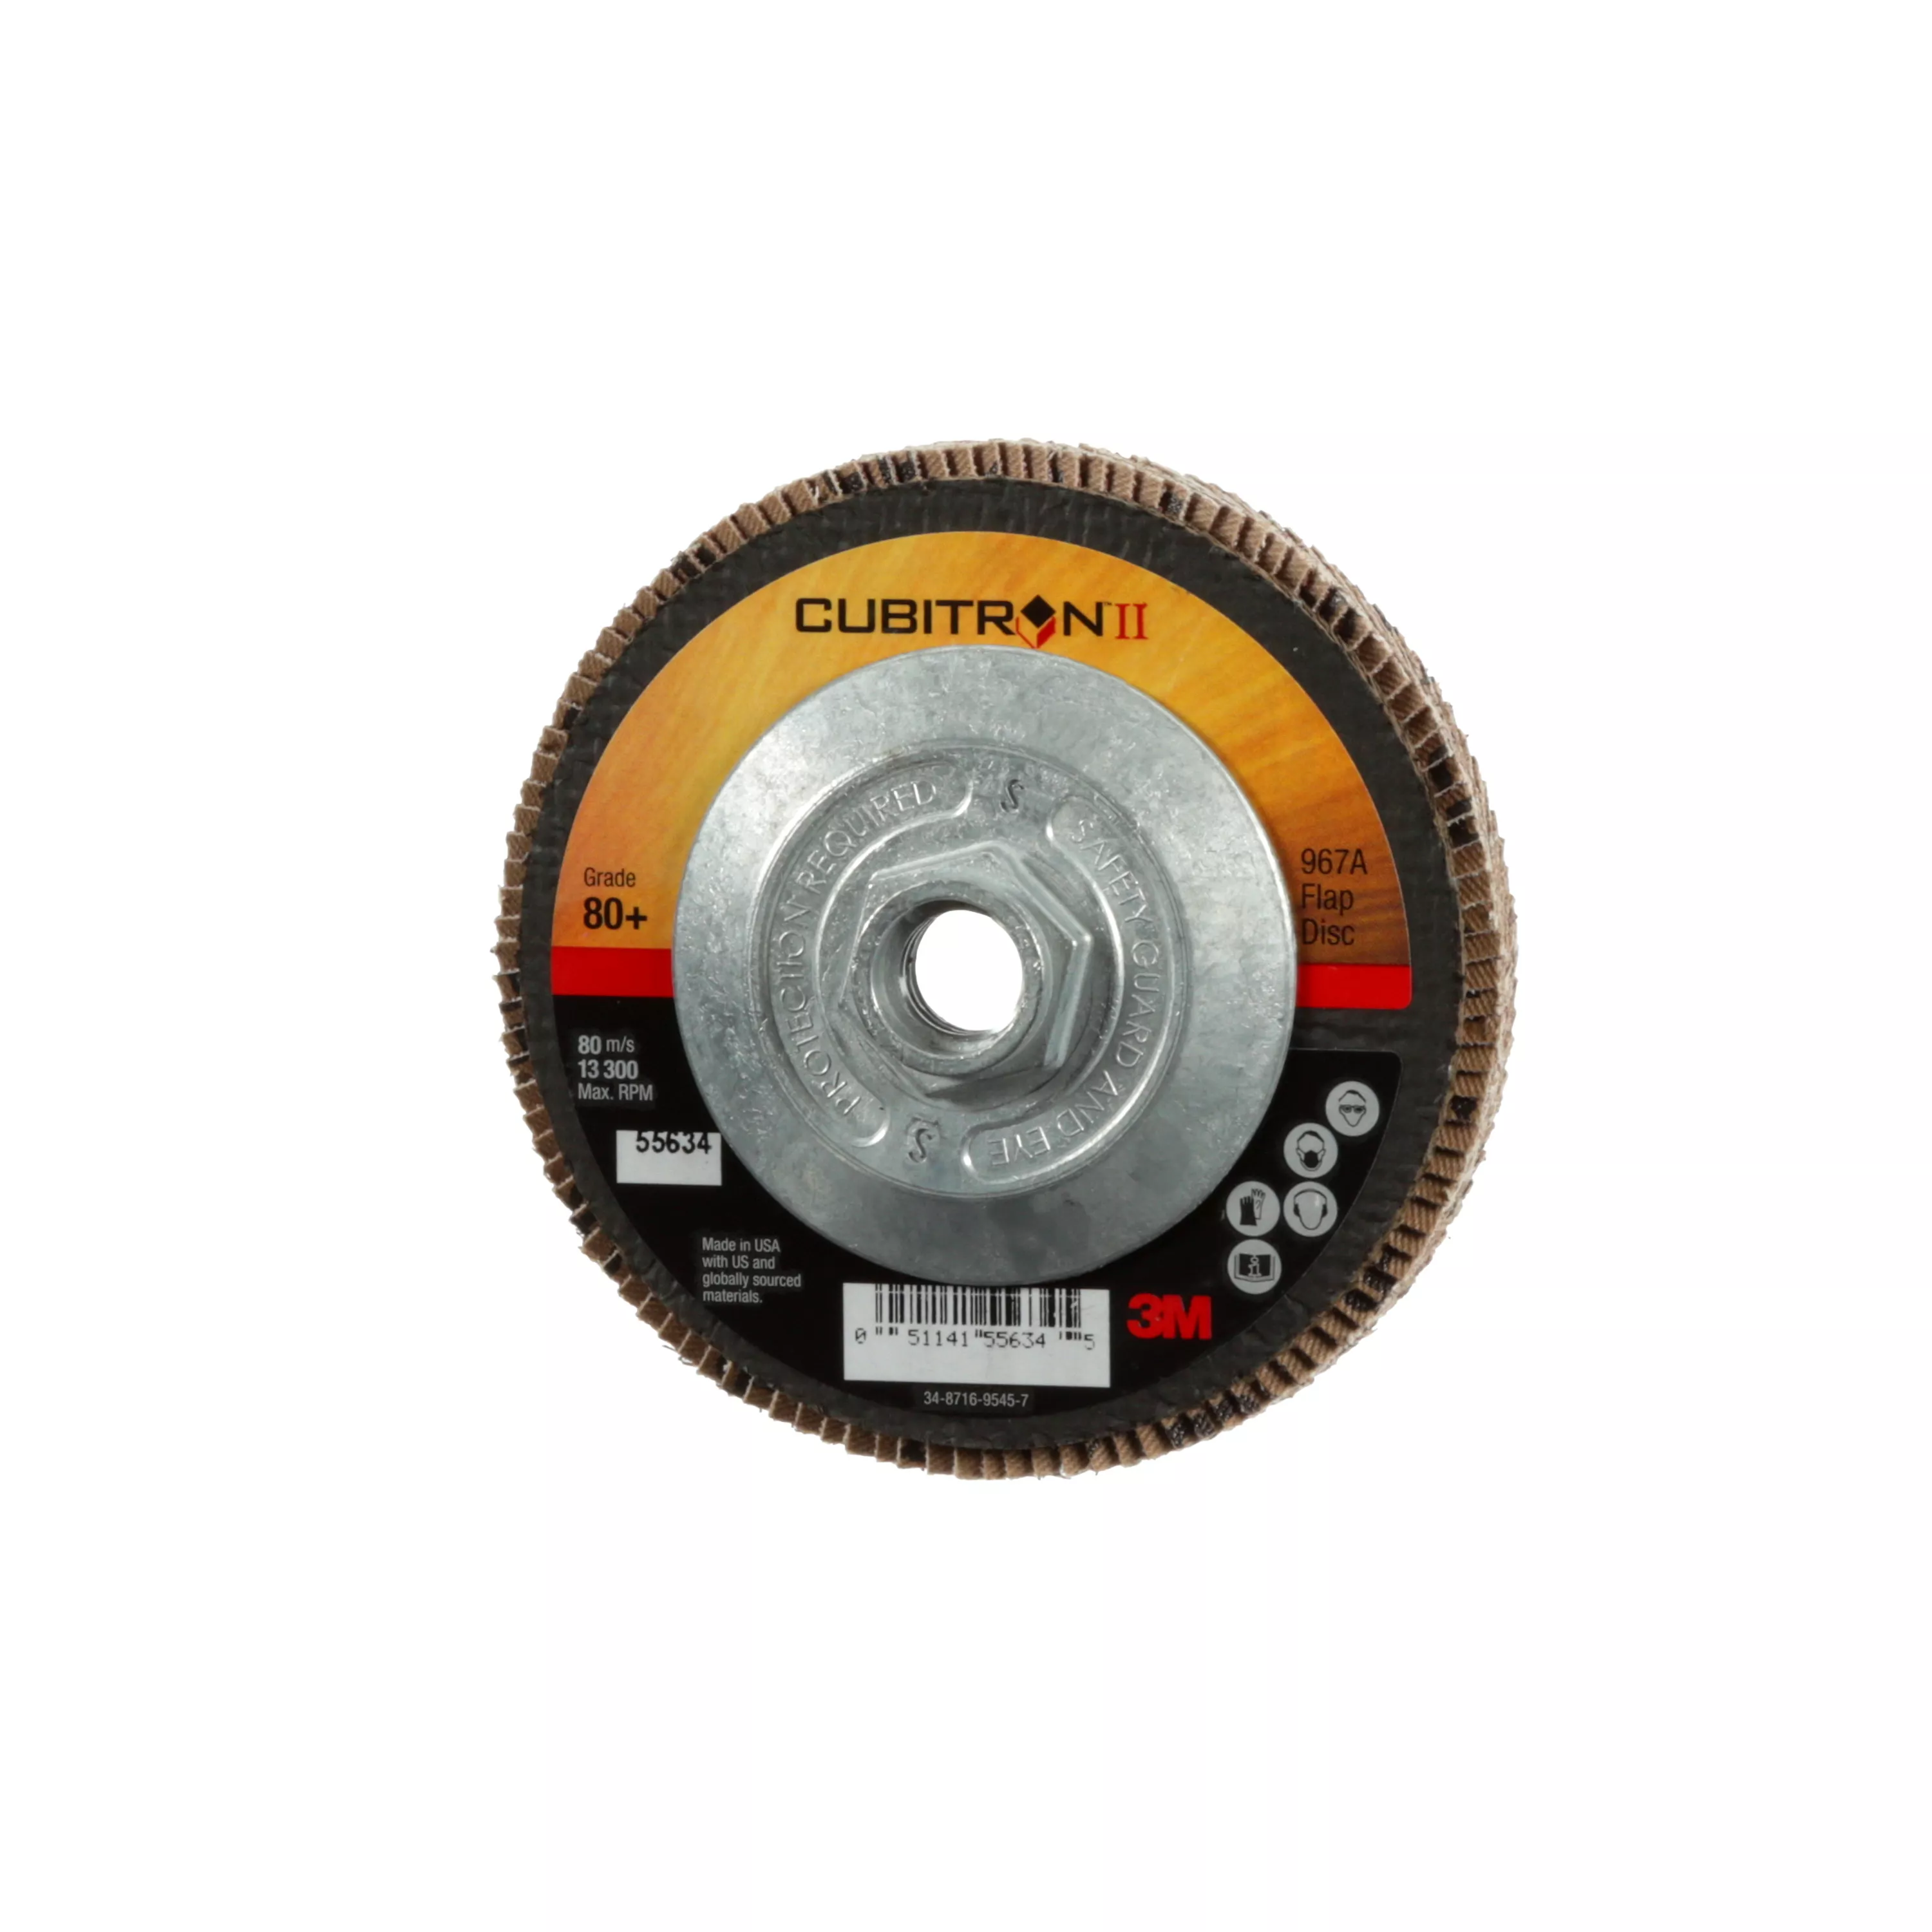 Product Number 967A | 3M™ Cubitron™ II Flap Disc 967A